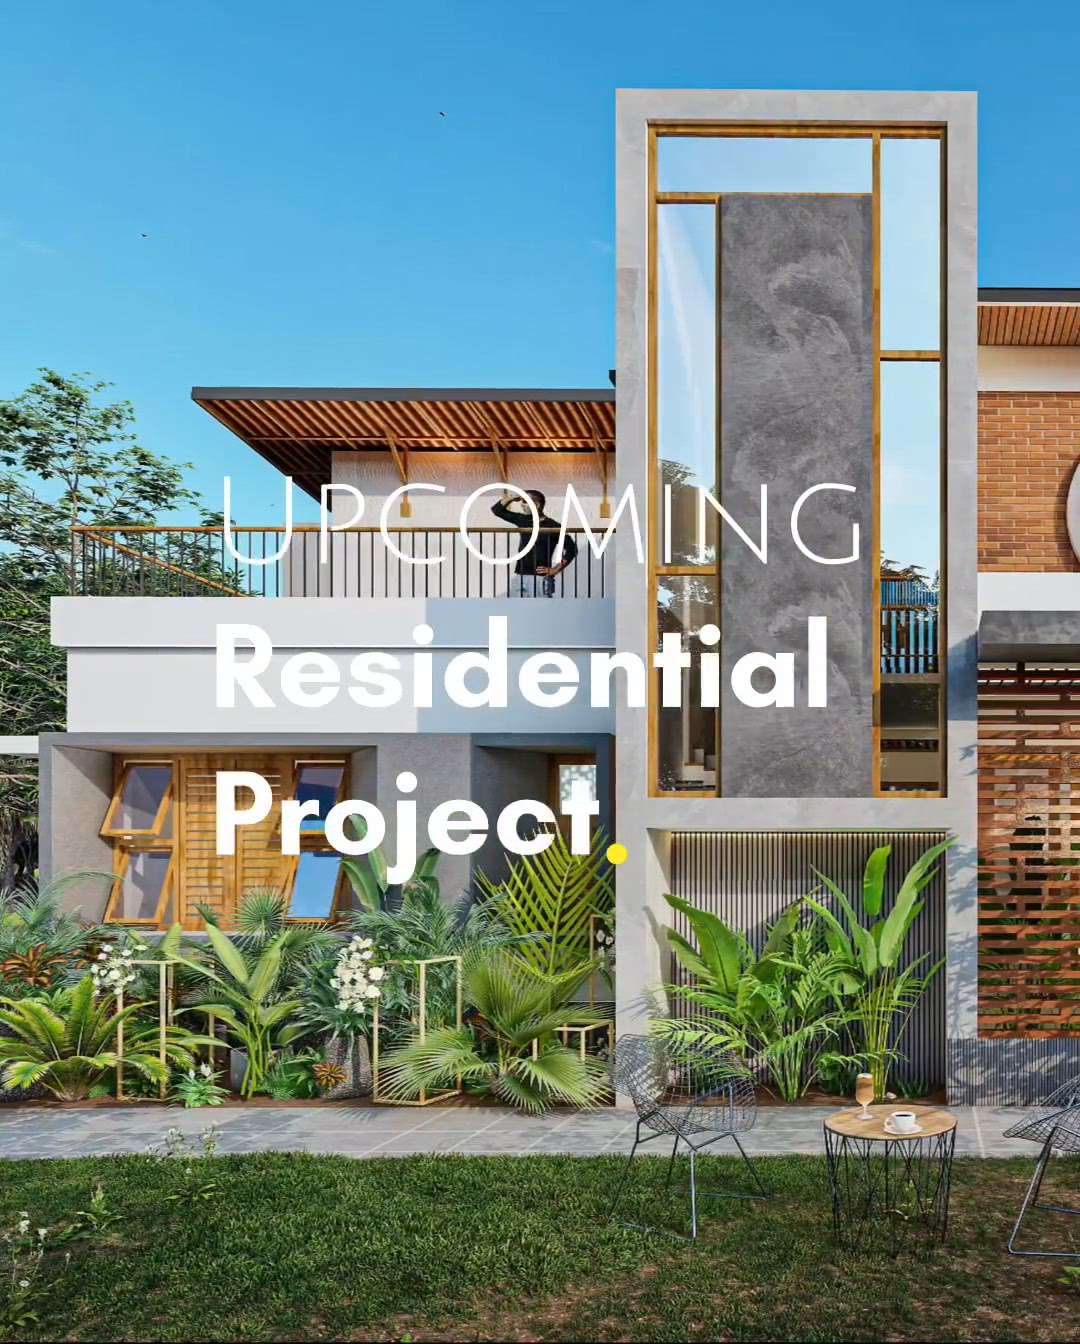 Residential Project
Area : 1750 Sqft
Exterior render.
.
.
#ModernHomes #ContemporaryLiving #ArchitecturalElegance #UrbanOasis #SleekDesigns #HomeExteriors #LuxeResidences #OutdoorLifestyle #ElegantSpaces #FunctionalDesign #AestheticAbode #ChicExteriors #StylishLiving #ArchitecturalBeauty #DreamHomeDesign #OutdoorElegance #HomeGoals #ResidentialCharm #ExteriorInspiration #TimelessDesigns #InnovativeArchitecture